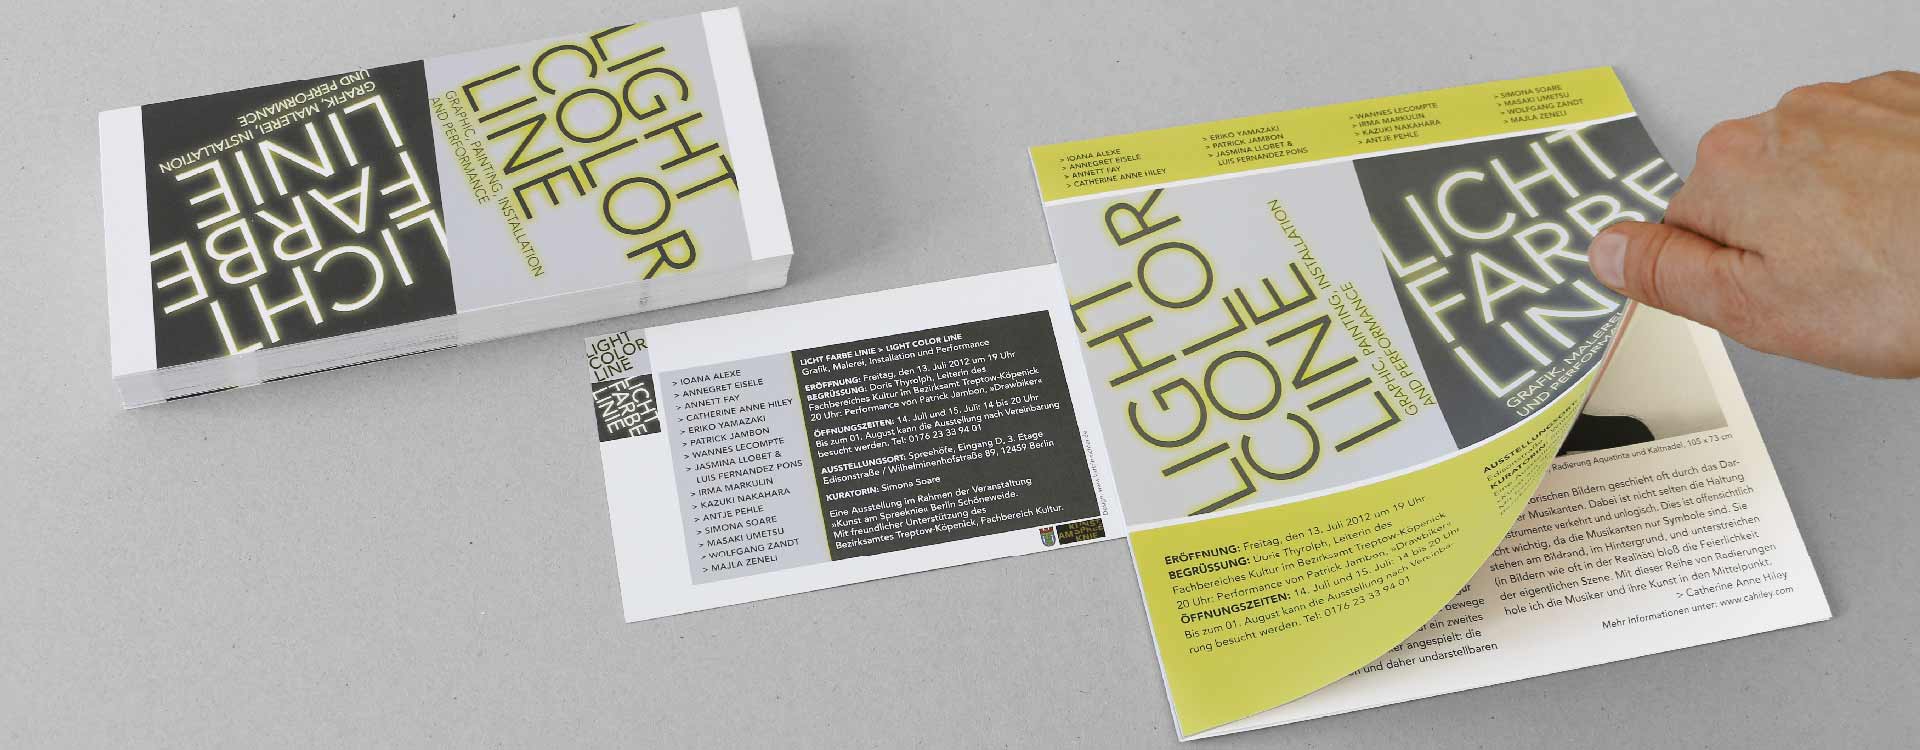 Leaflet and invitation card for the exhibition Light Colour Line in the Spreehöfen in Berlin Schöneweide; Design: Kattrin Richter | Graphic Design Studio